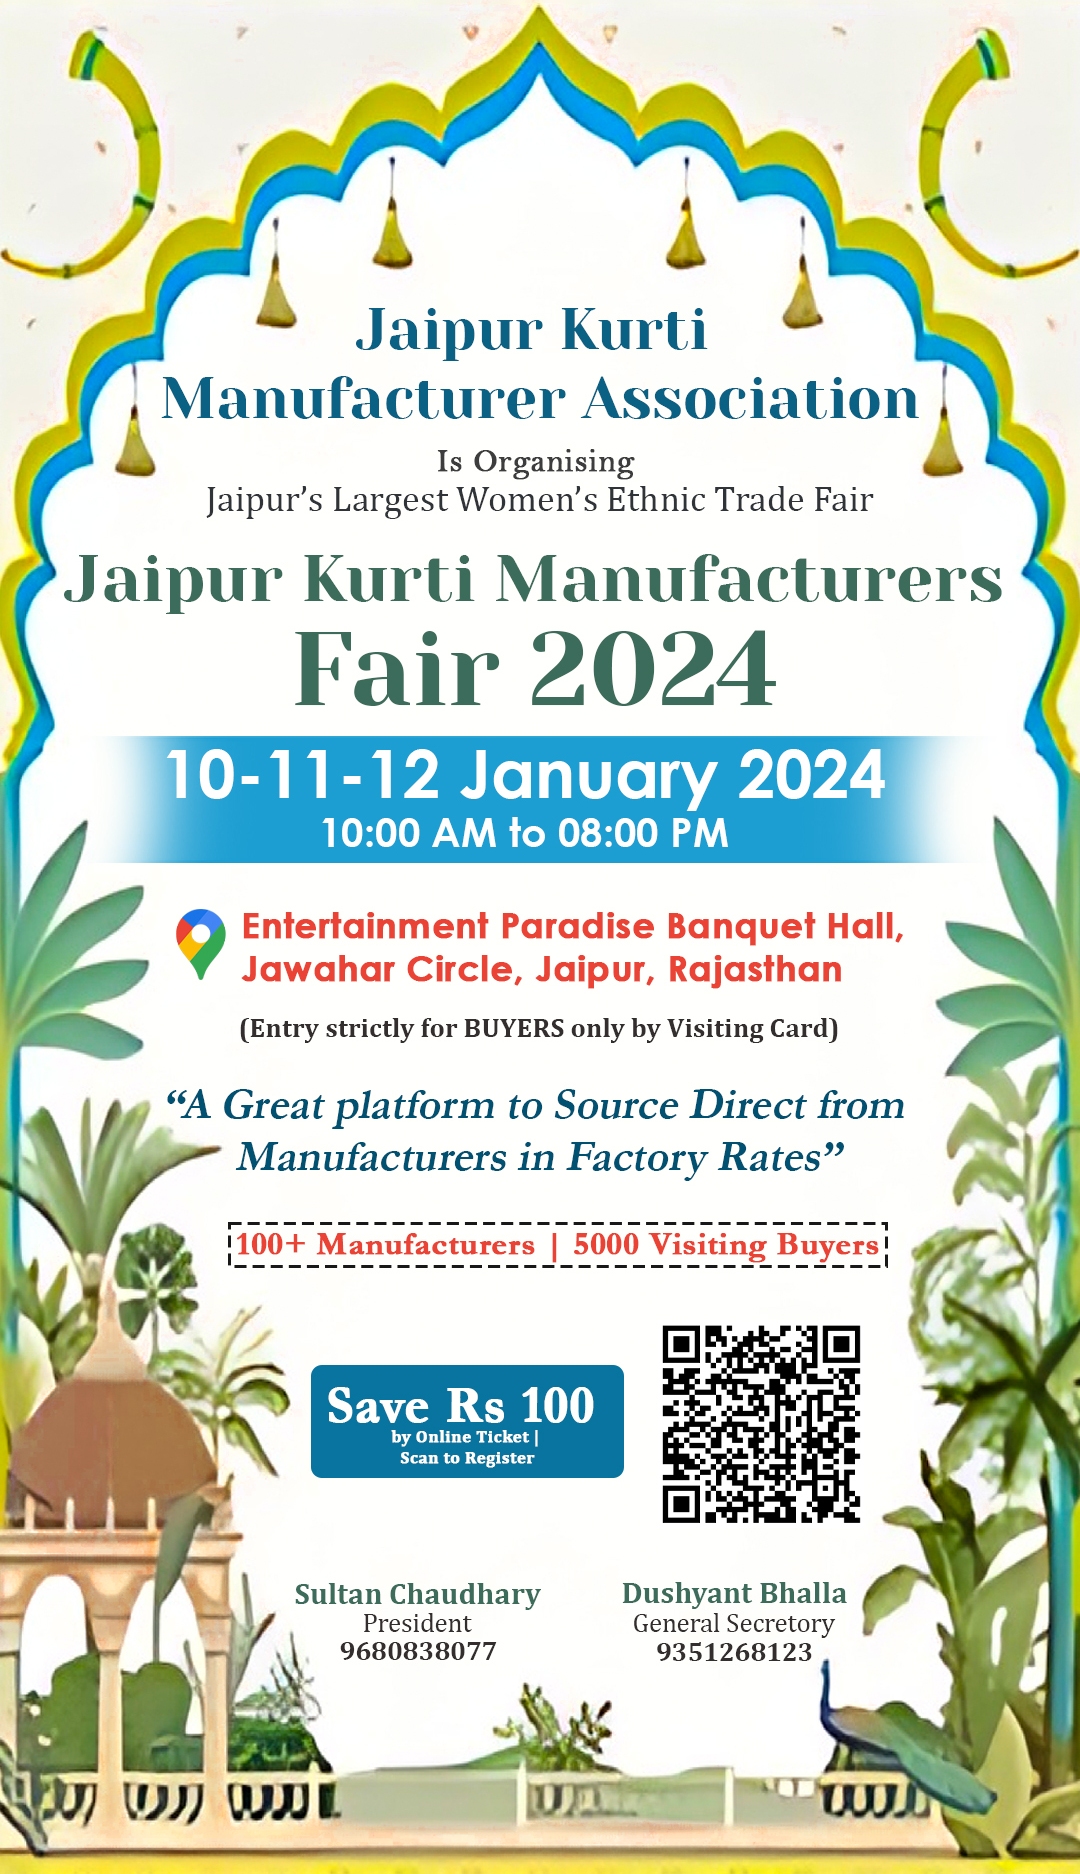 Jaipur Kurti Manufacturers Fair 2024, Jaipur Kurti Expo, Jaipur Garment Fair, Clothing Exhibition in Jaipur, Kurti Fair,